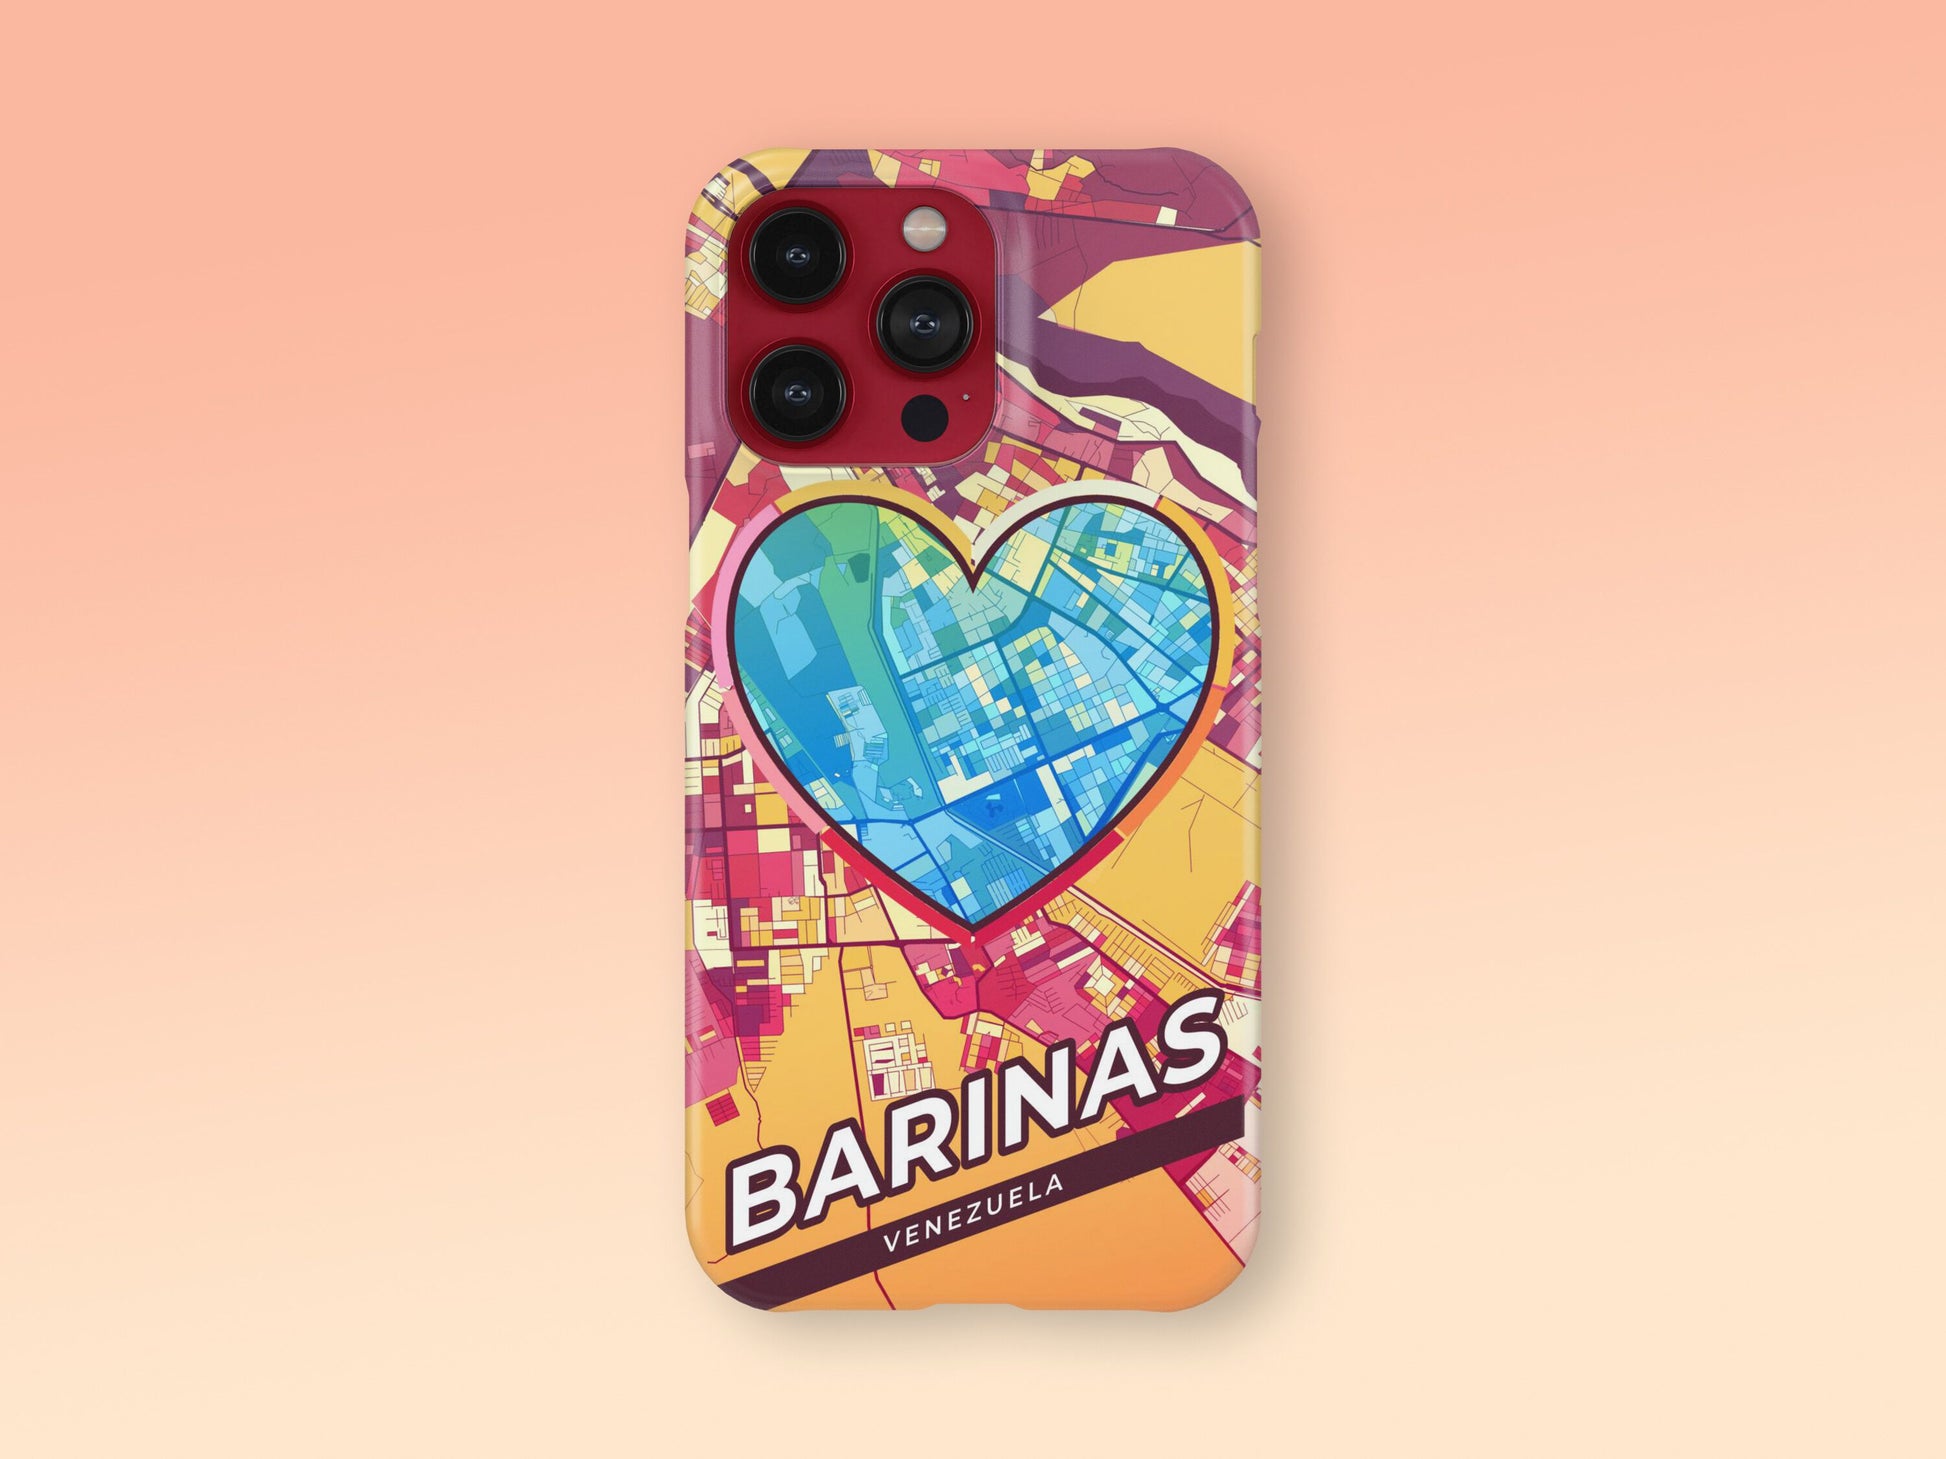 Barinas Venezuela slim phone case with colorful icon. Birthday, wedding or housewarming gift. Couple match cases. 2